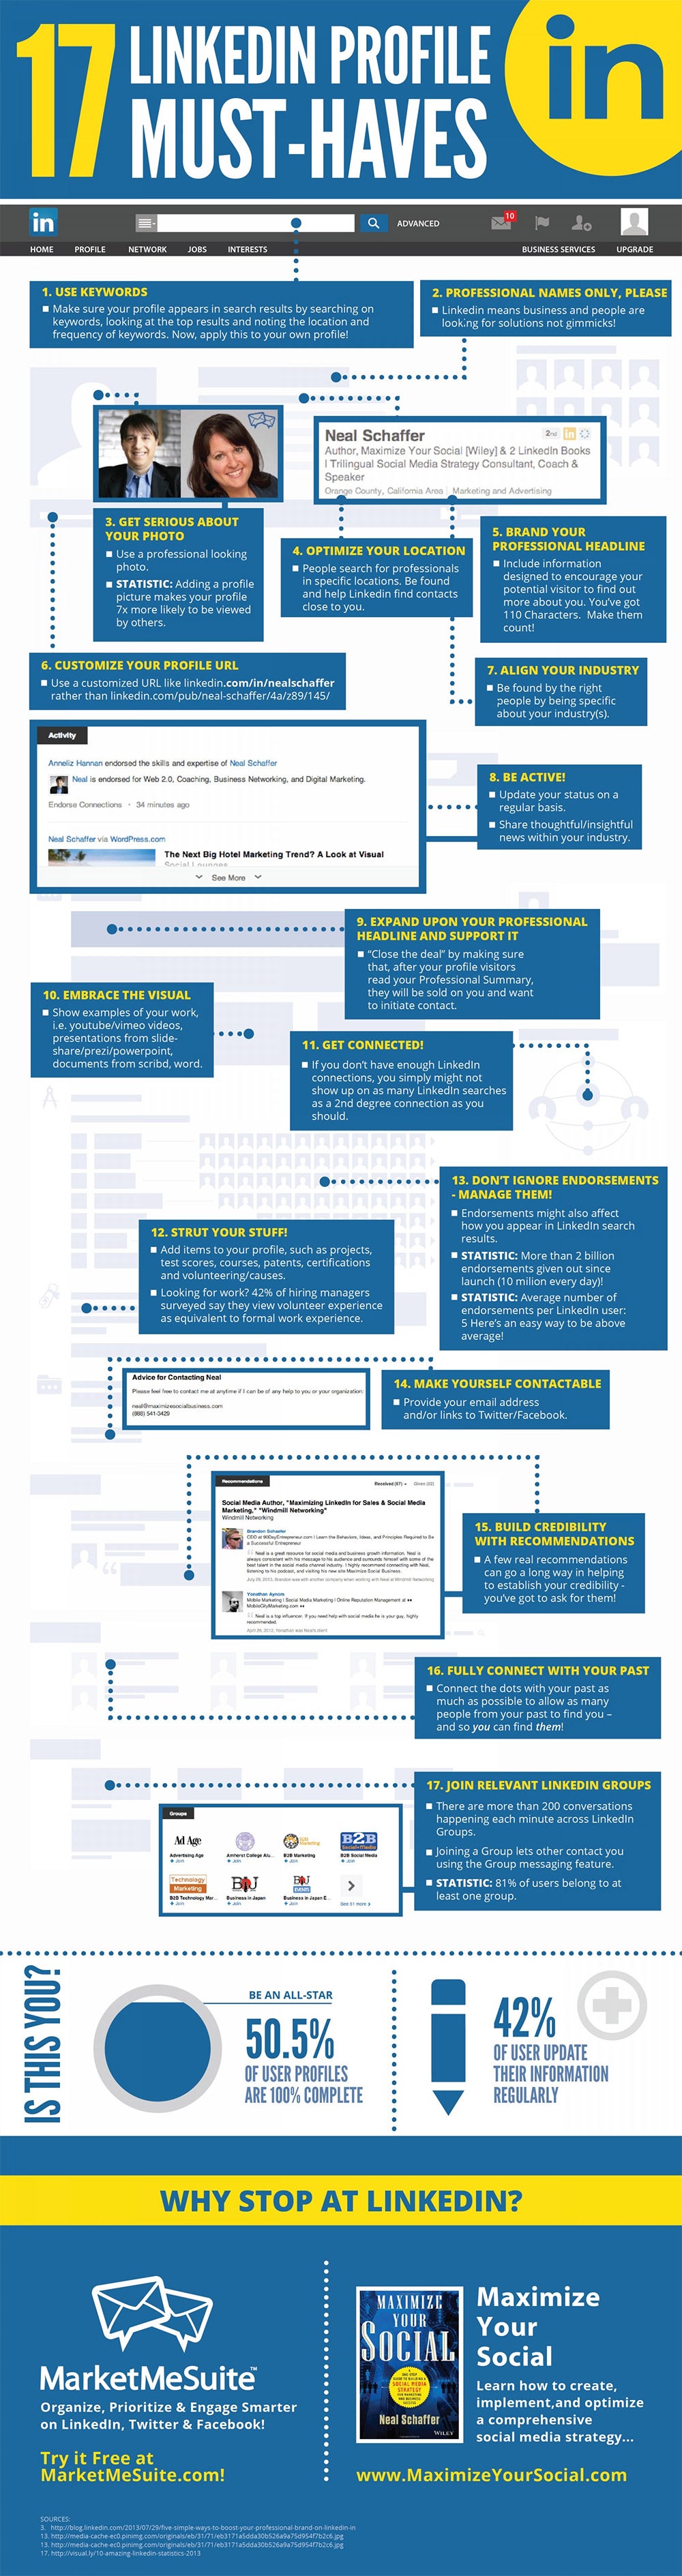 http://www.entrepreneur.com/dbimages/article/1393271821-17-must-have-features-linkedin-profile-infographic.jpg